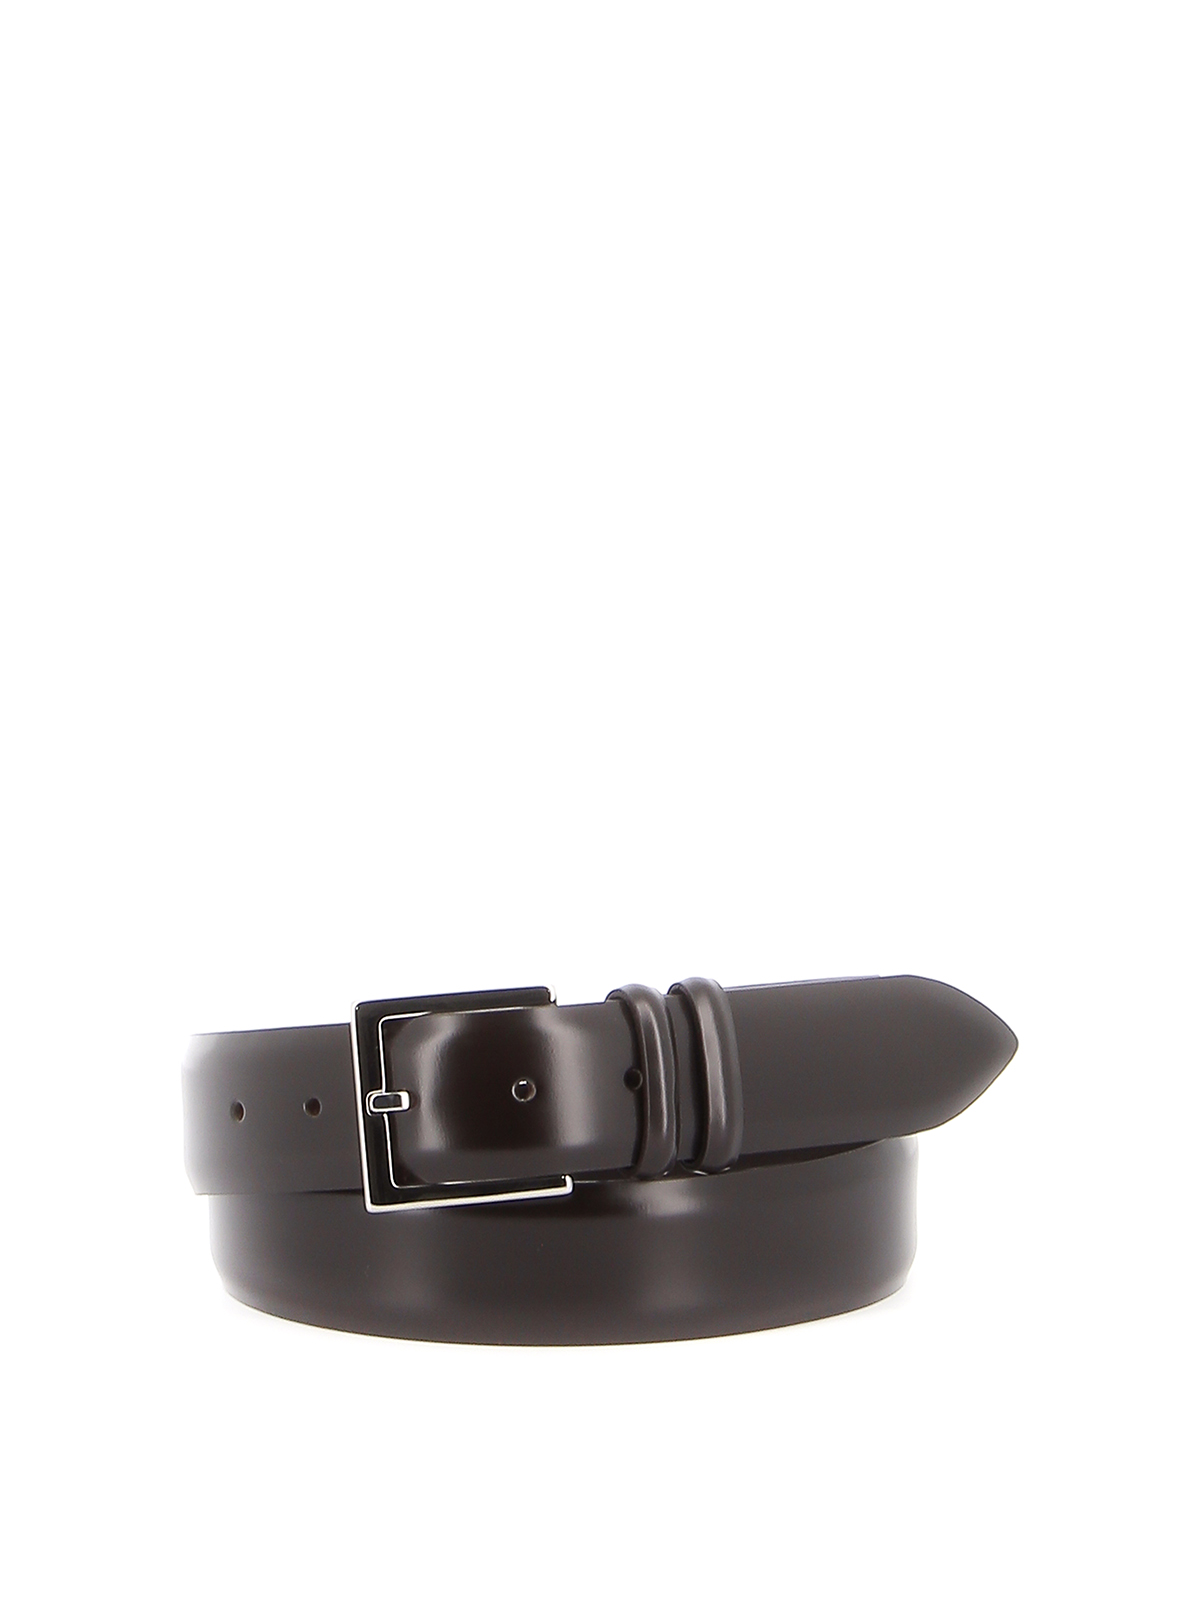 Belts Orciani - Toledo leather belt - U07532TOLEDOTMORO | iKRIX.com